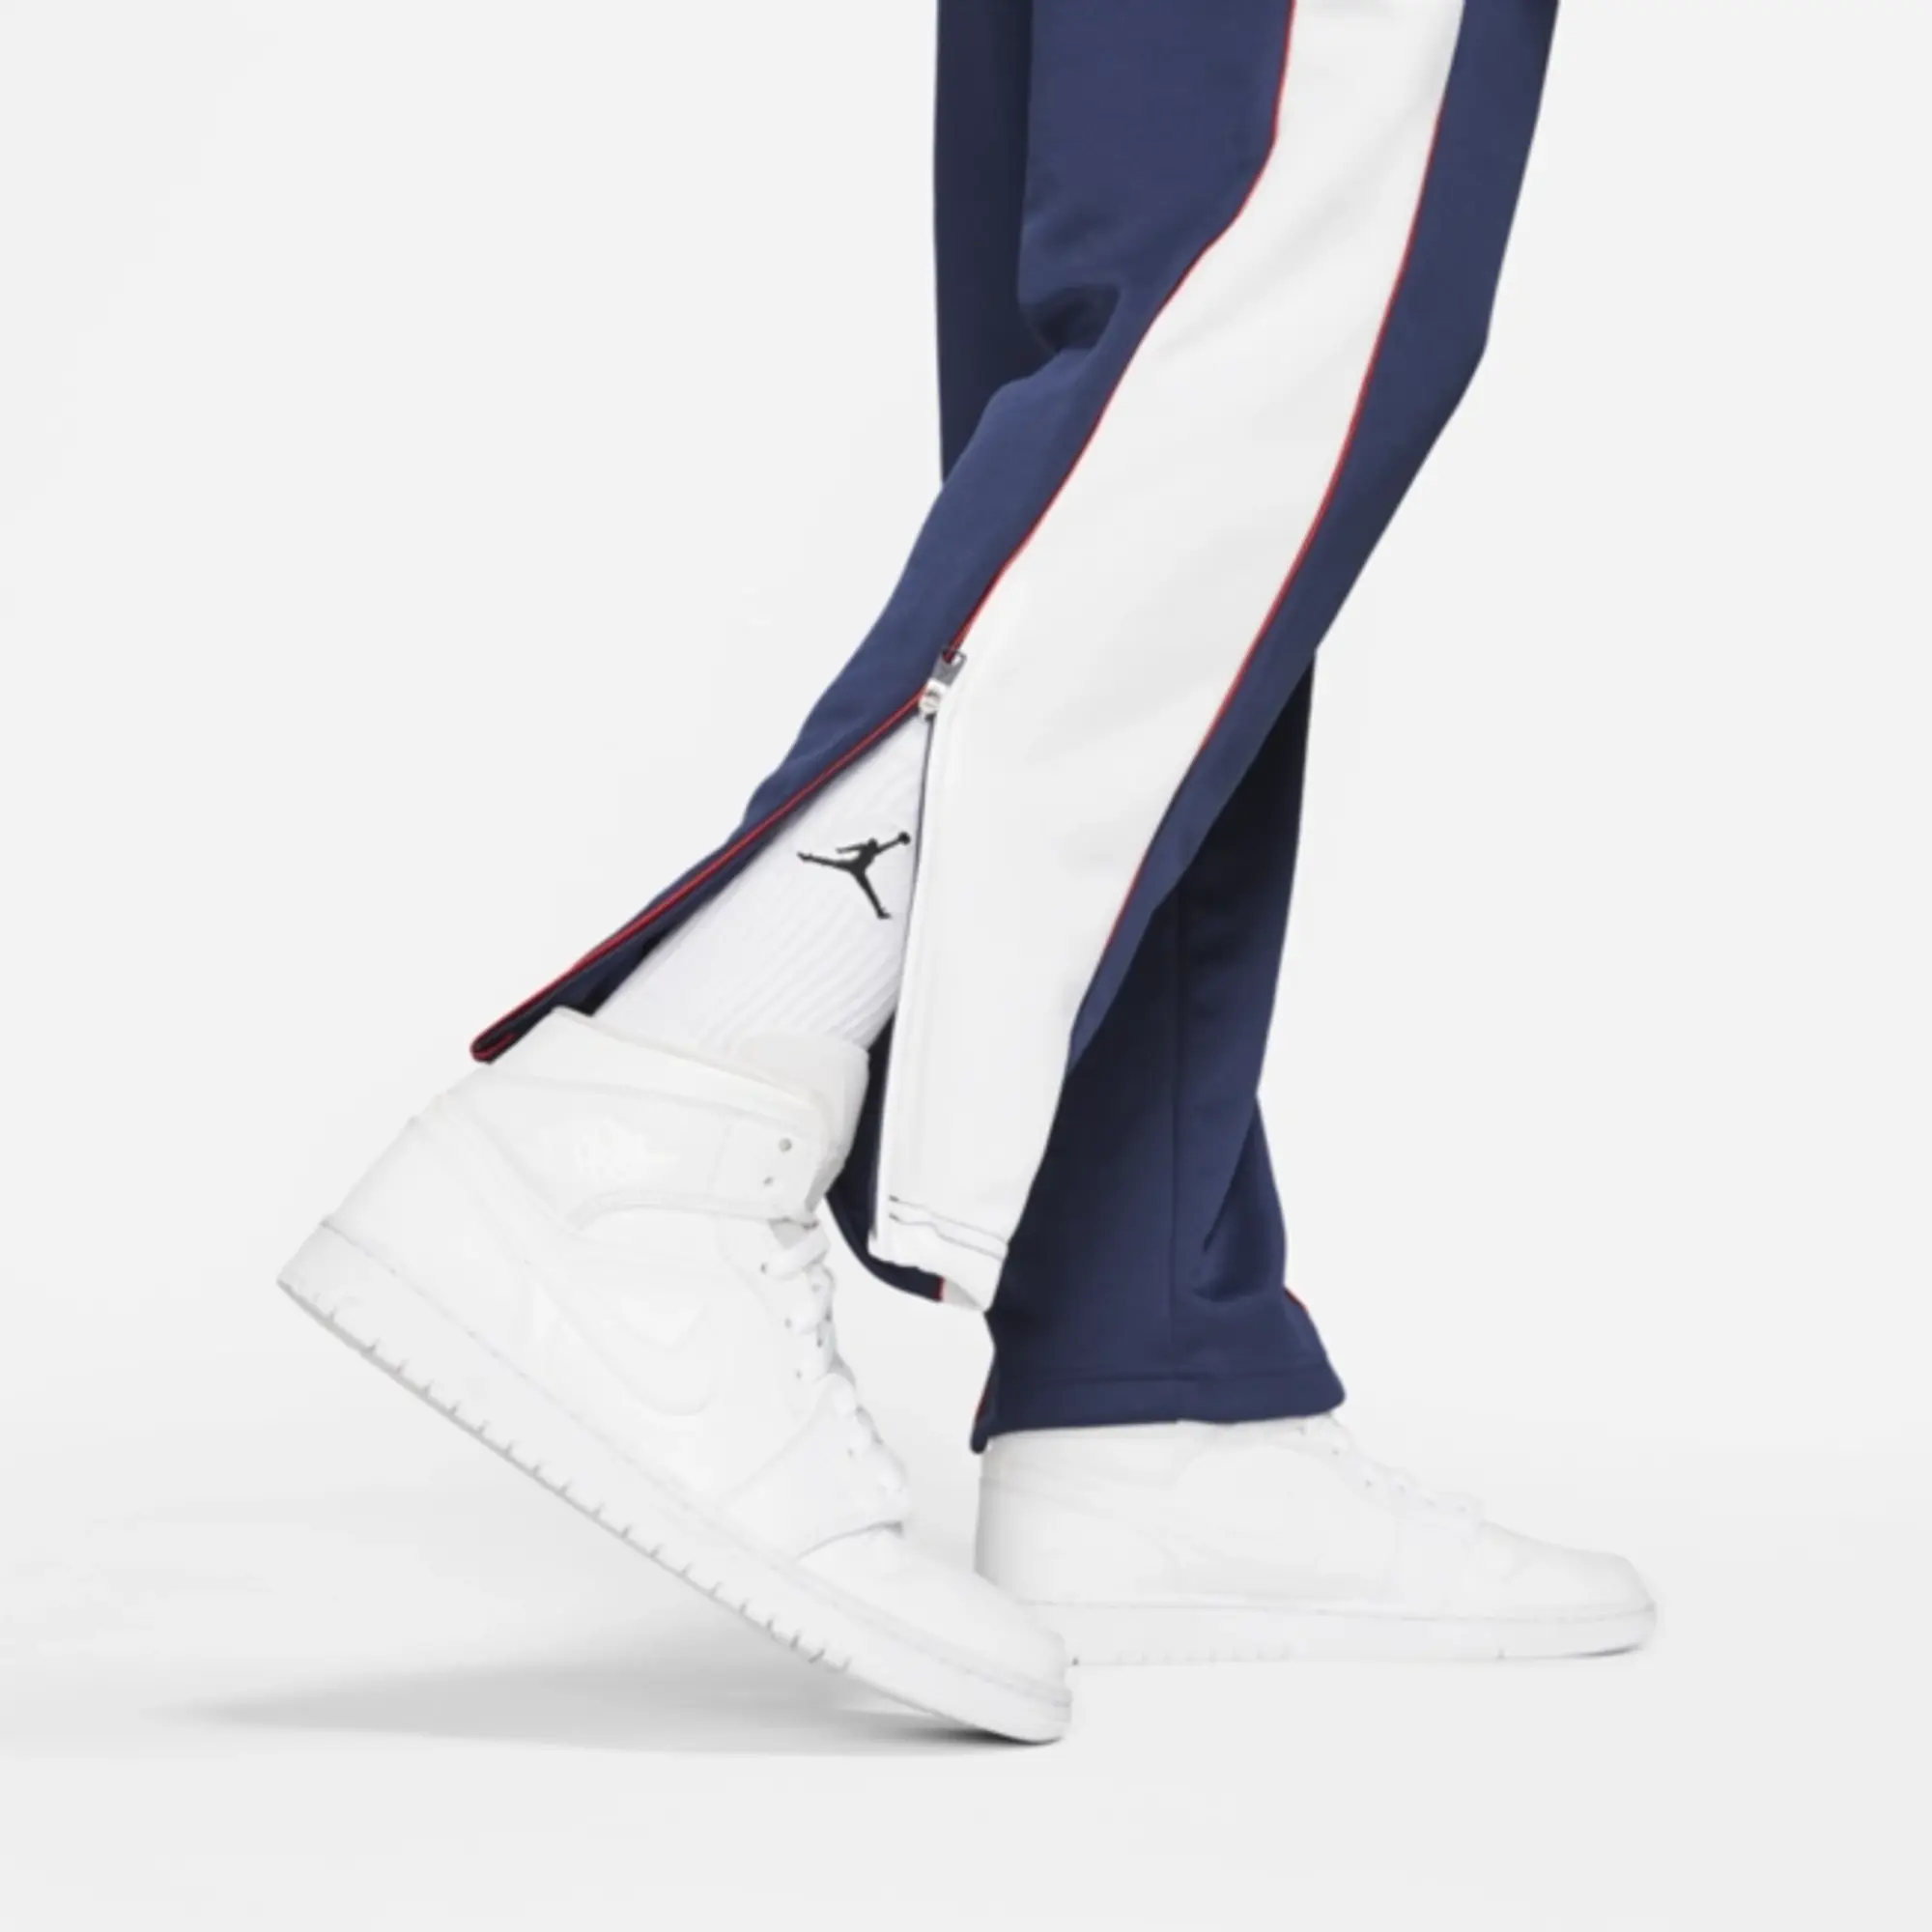 Nike Paris Saint-Germain Men's Anthem 2.0 Pants - Blue